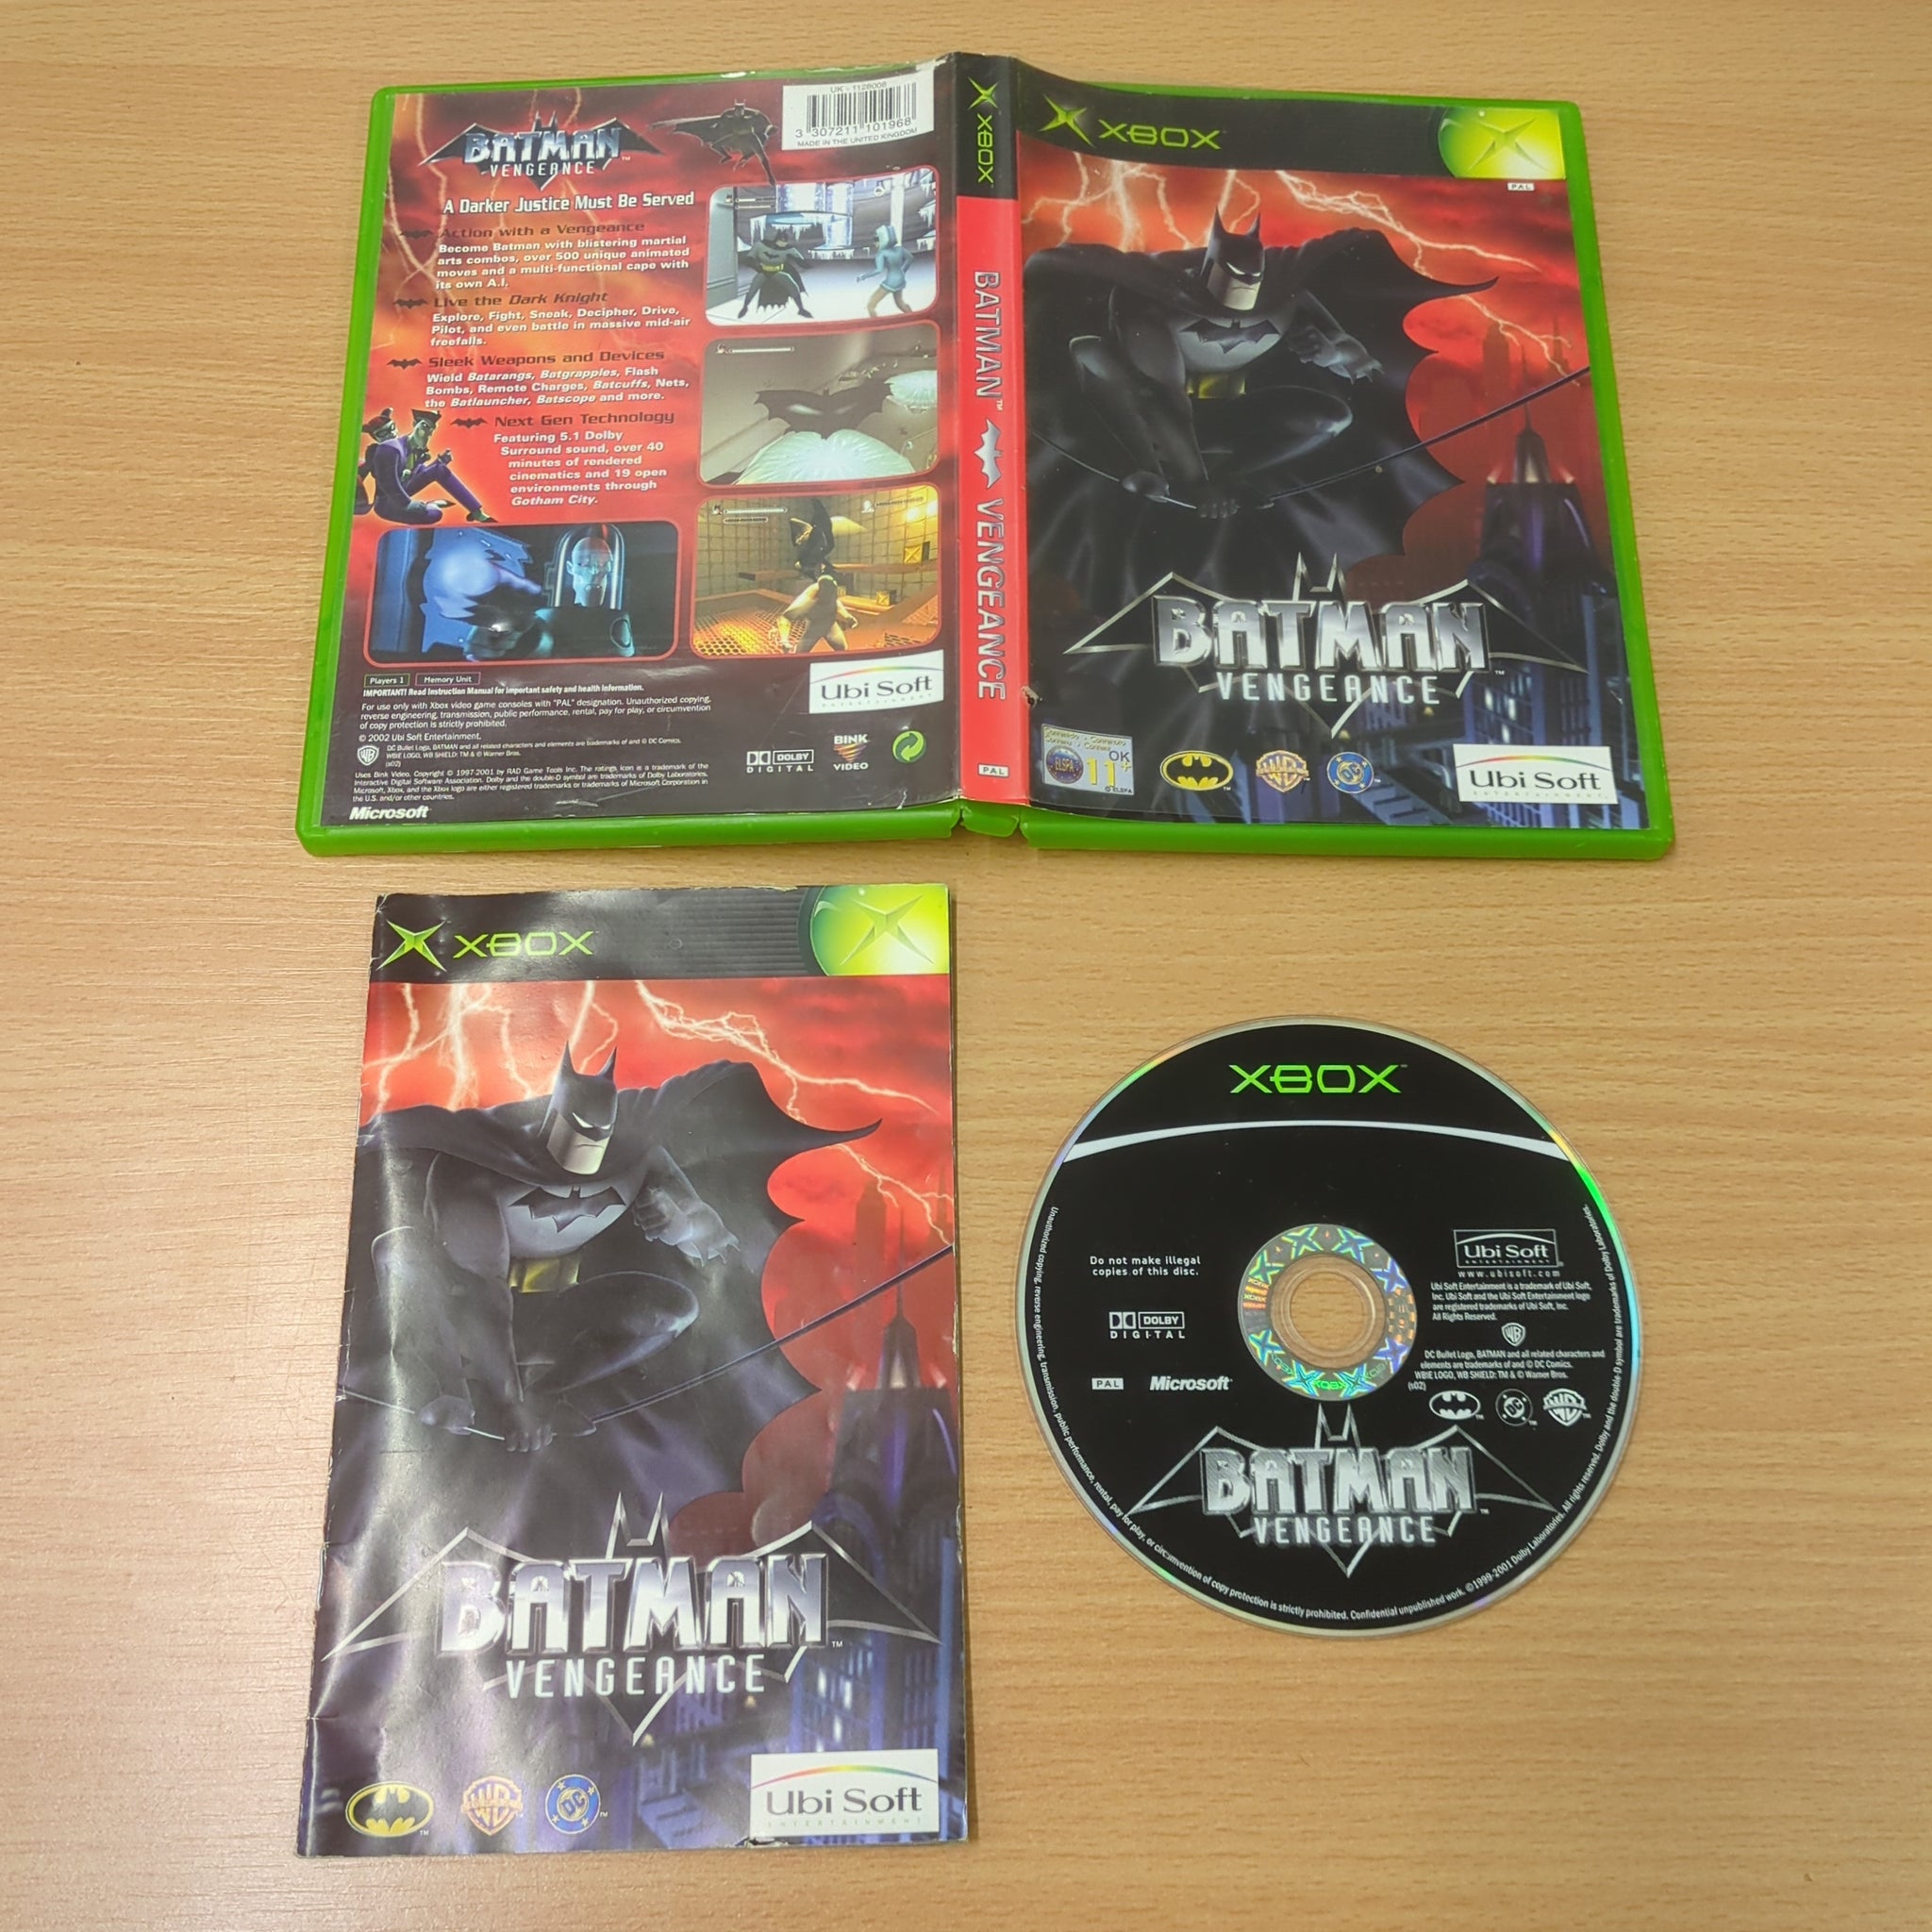 Batman Vengeance original Xbox game